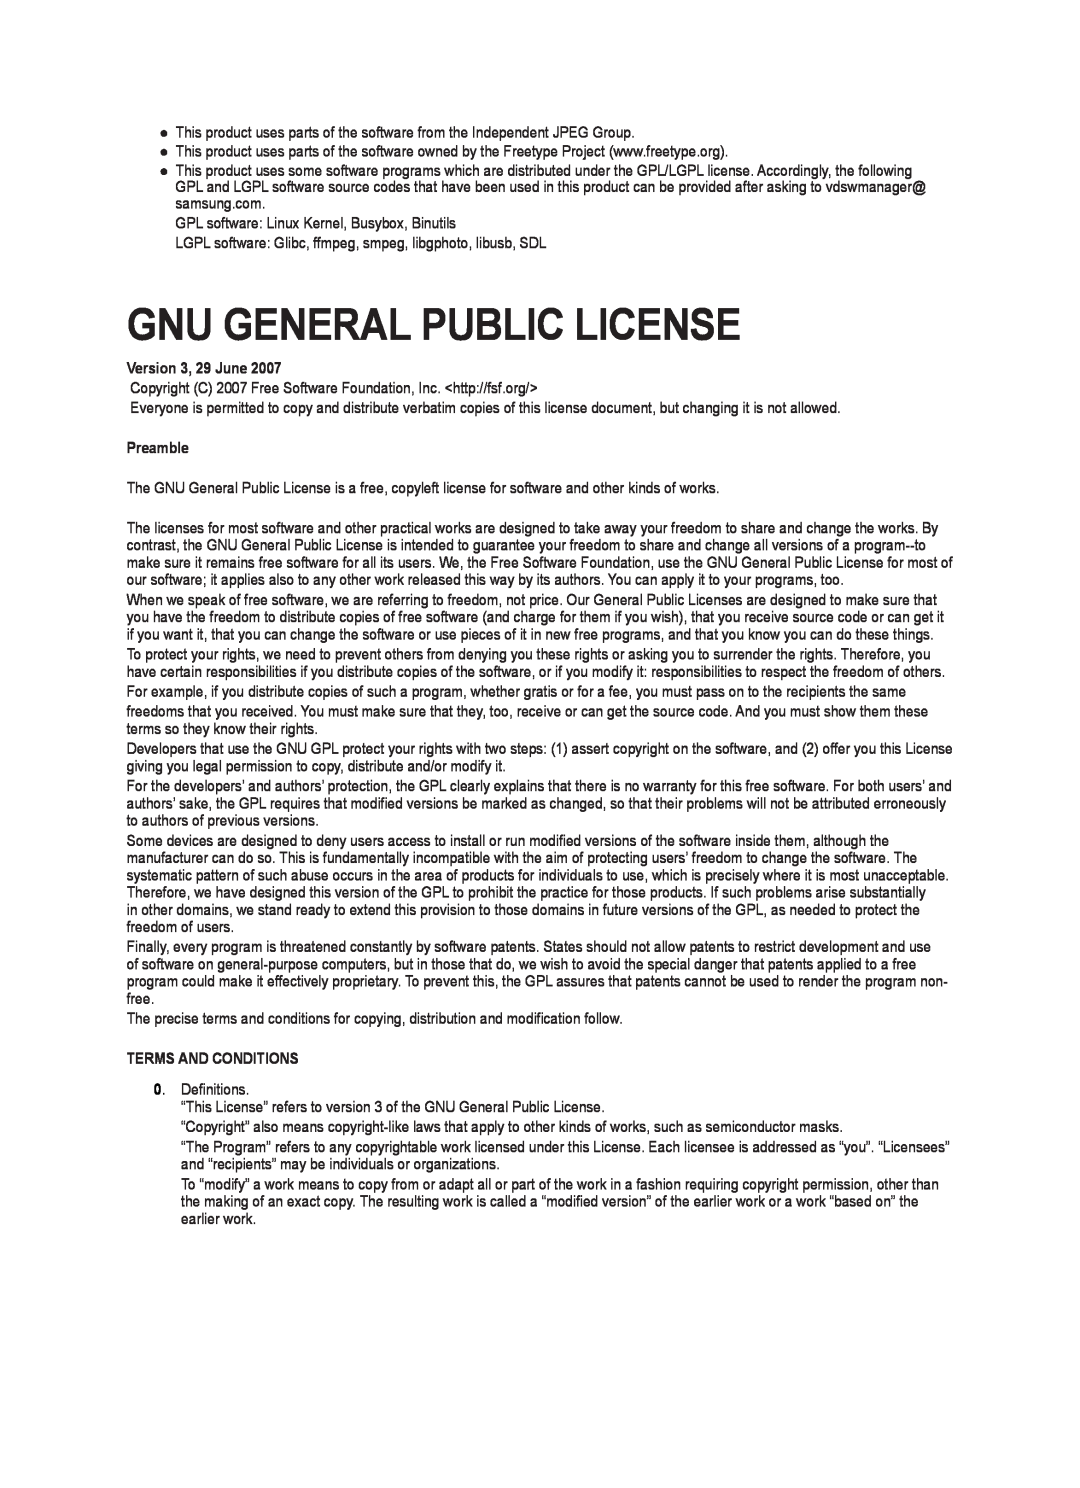 Samsung LE46B553, LE40B550, LE40B554 Gnu General Public License, Version 3, 29 June, Preamble, Terms And Conditions 